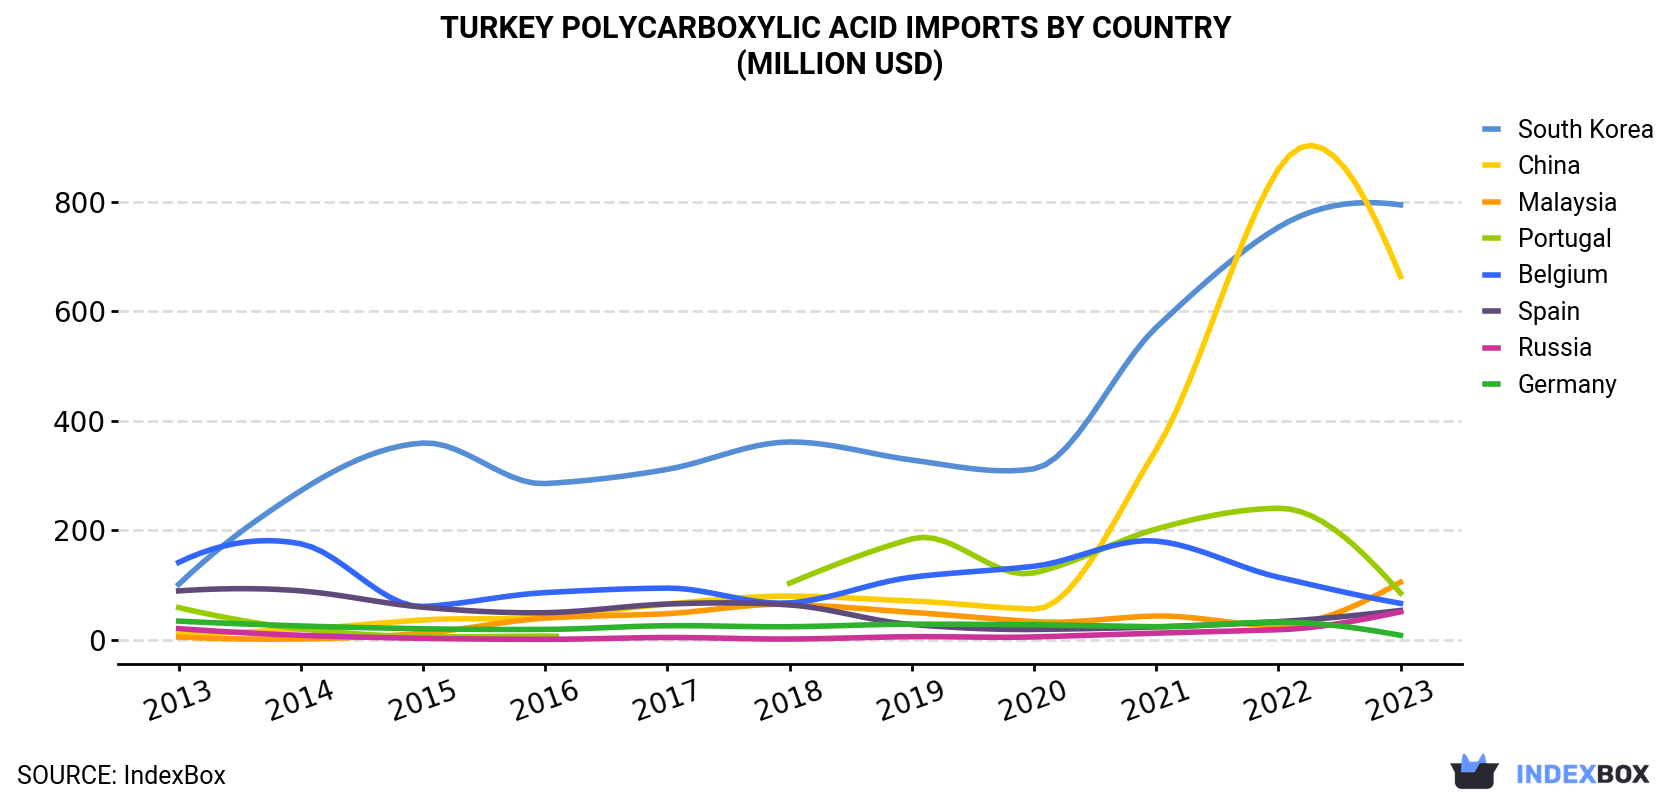 Turkey Polycarboxylic Acid Imports By Country (Million USD)